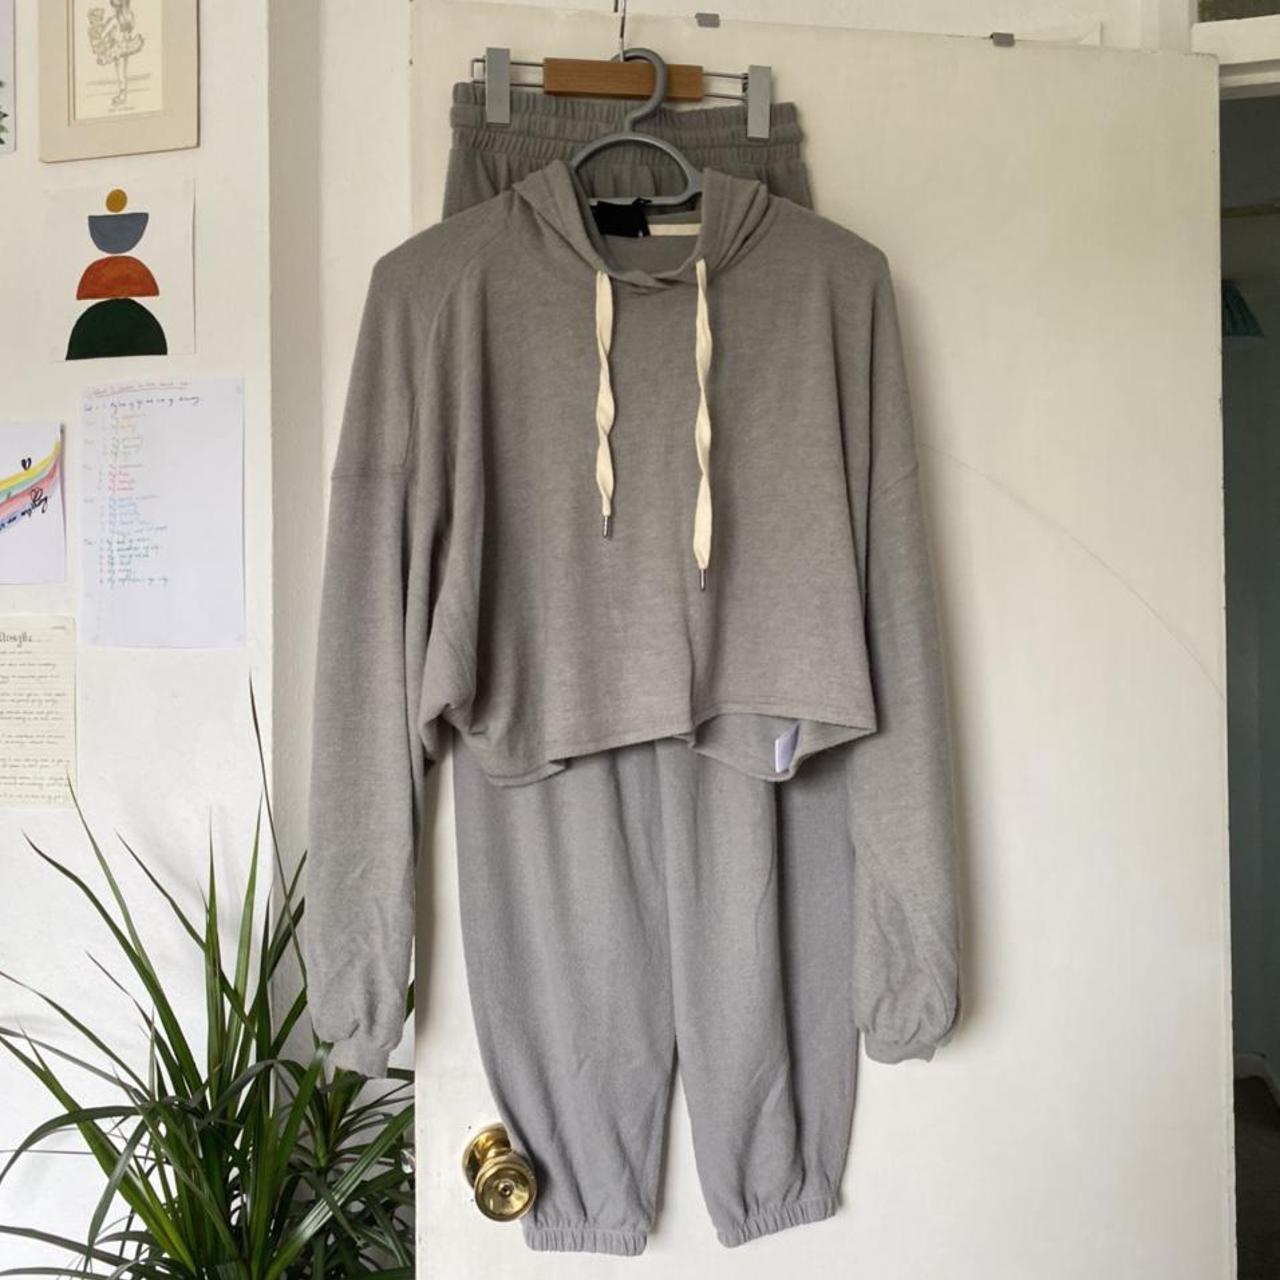 Urban Outfitters Women's Grey Pajamas